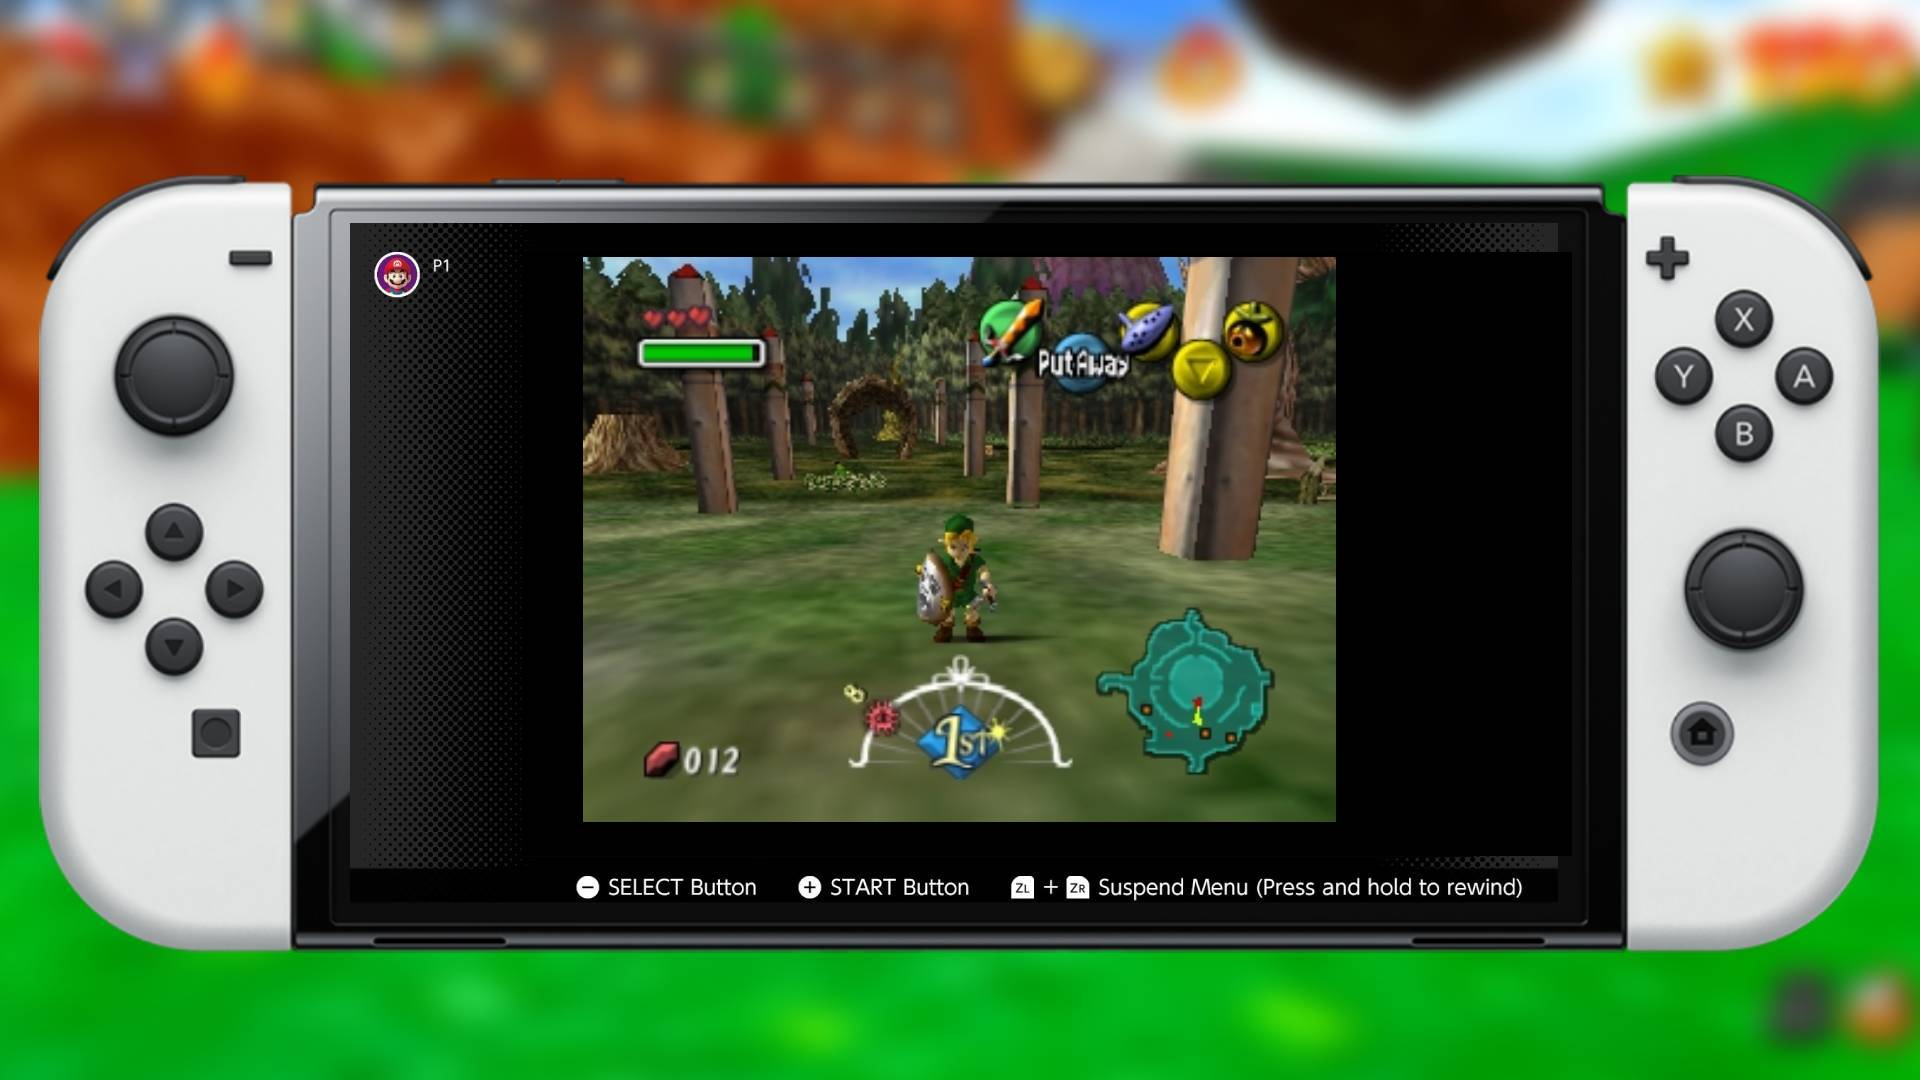 The Legend of Zelda 3DS Soft 4 pieces set Nintendo bargain Used Shooting  game